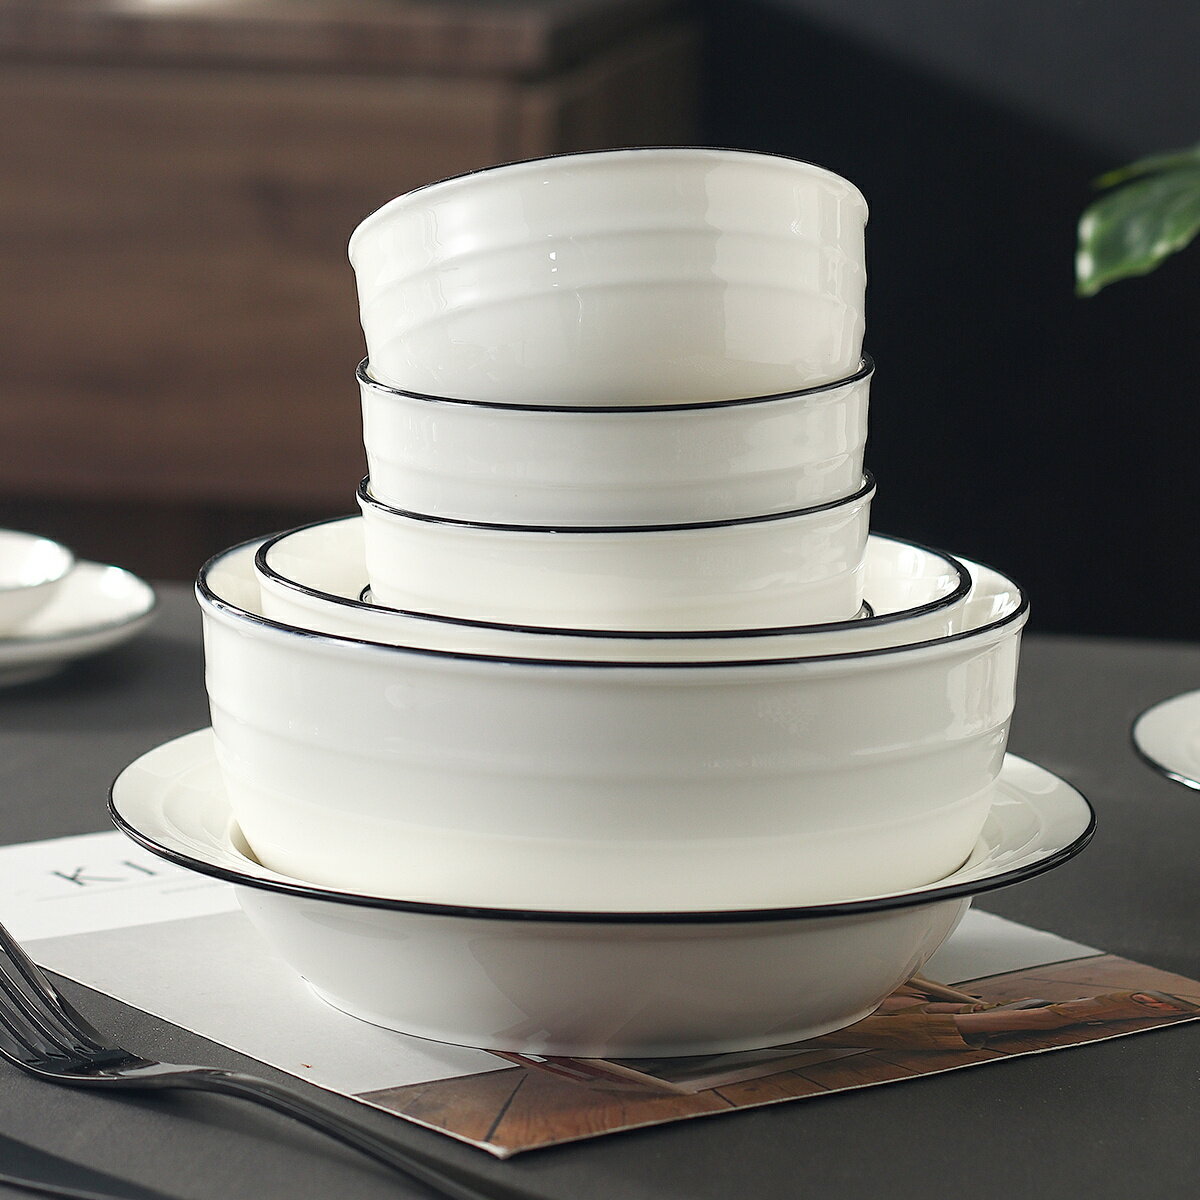 ins簡約碗碟套裝家用陶瓷碗日式飯碗盤子牛排盤沙拉碗組合餐具